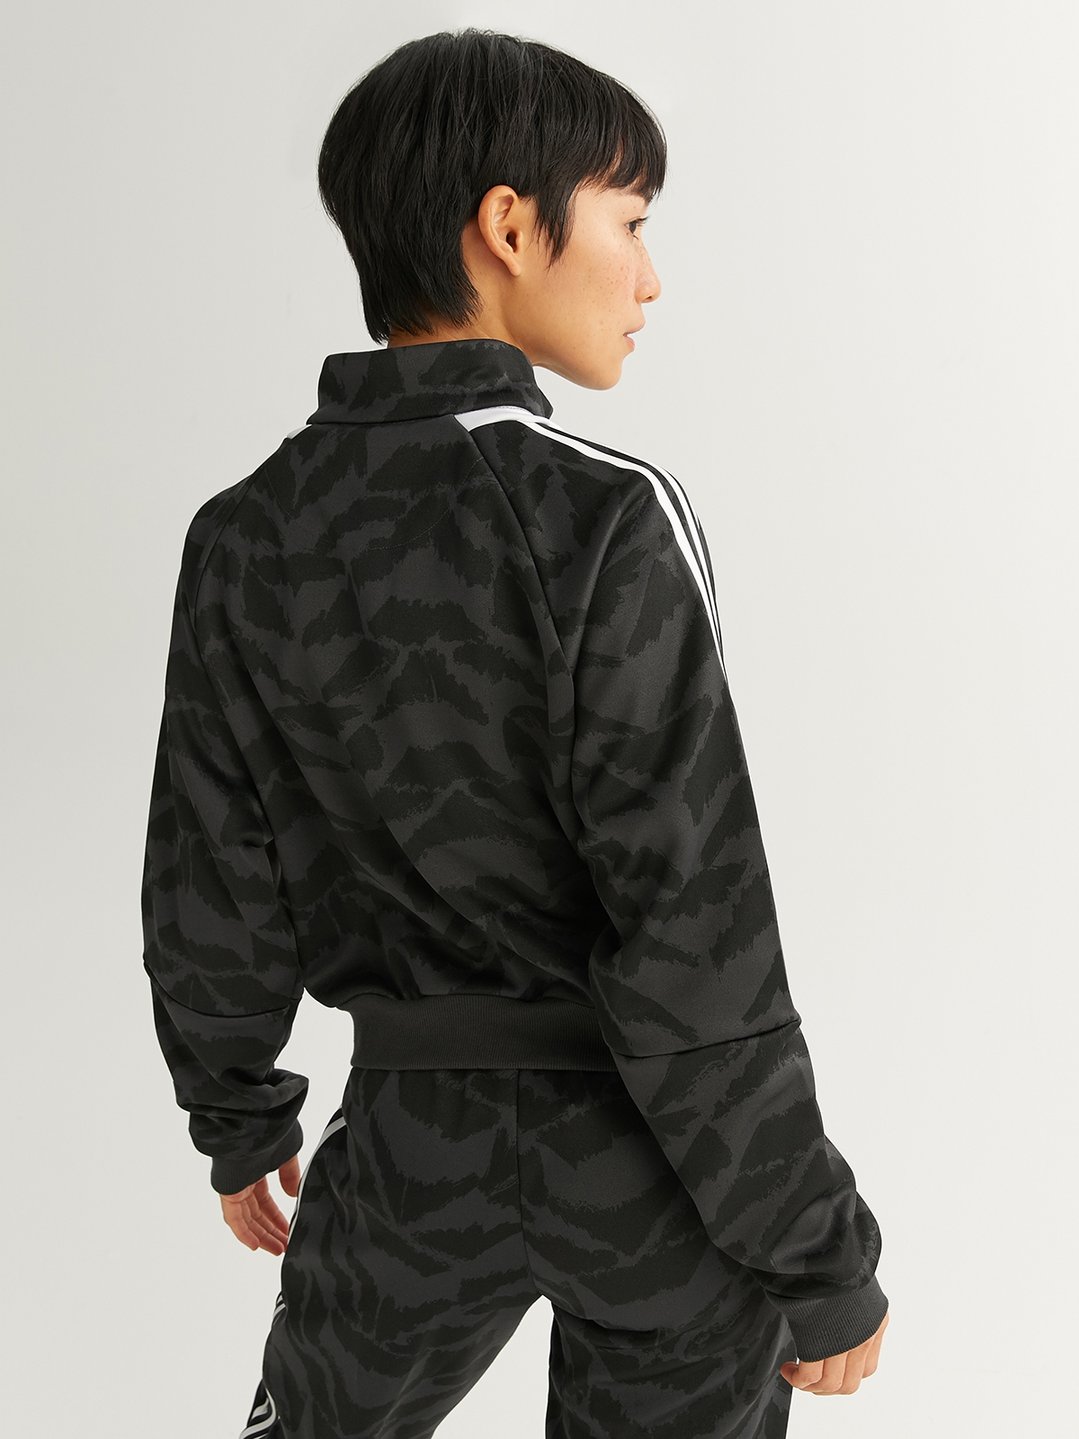 Track Carbon/Black/White Tiro Fashion Suit - Top - Pomelo Lifestyle Up